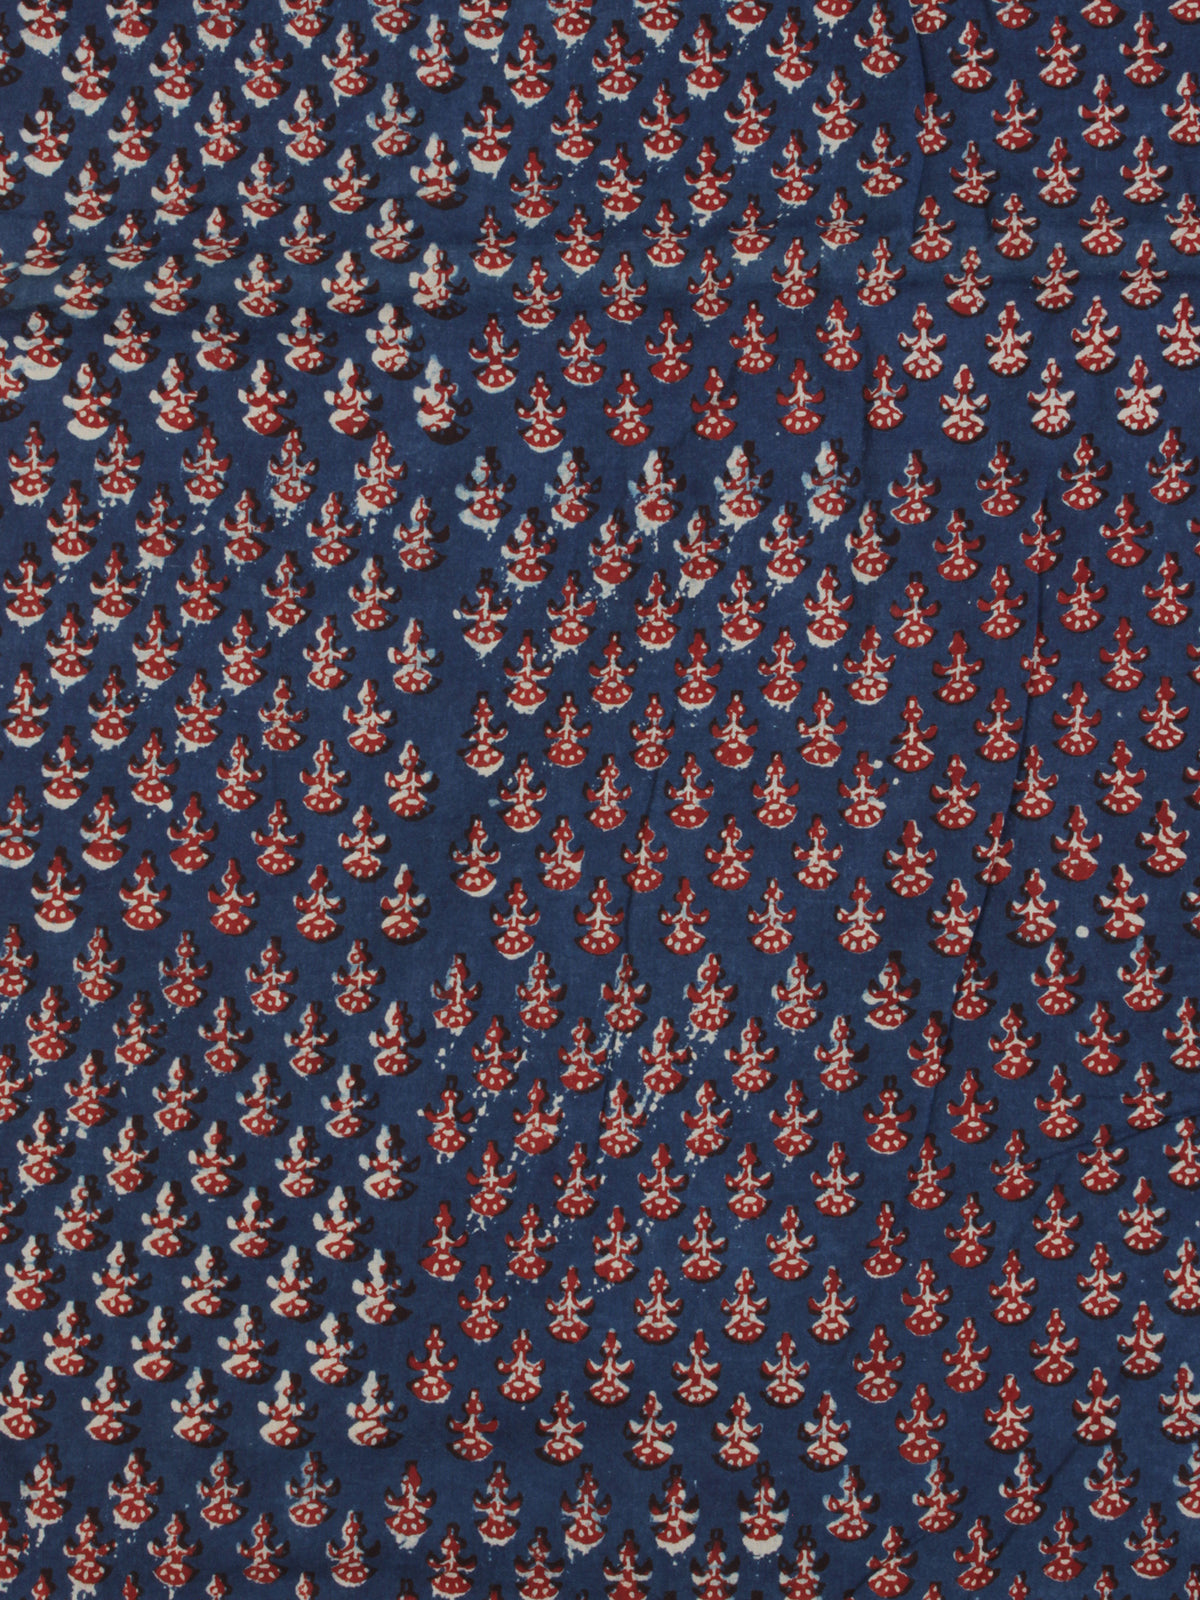 Indigo Ivory Red Ajrakh Hand Block Printed Cotton Fabric Per Meter - F003F2113